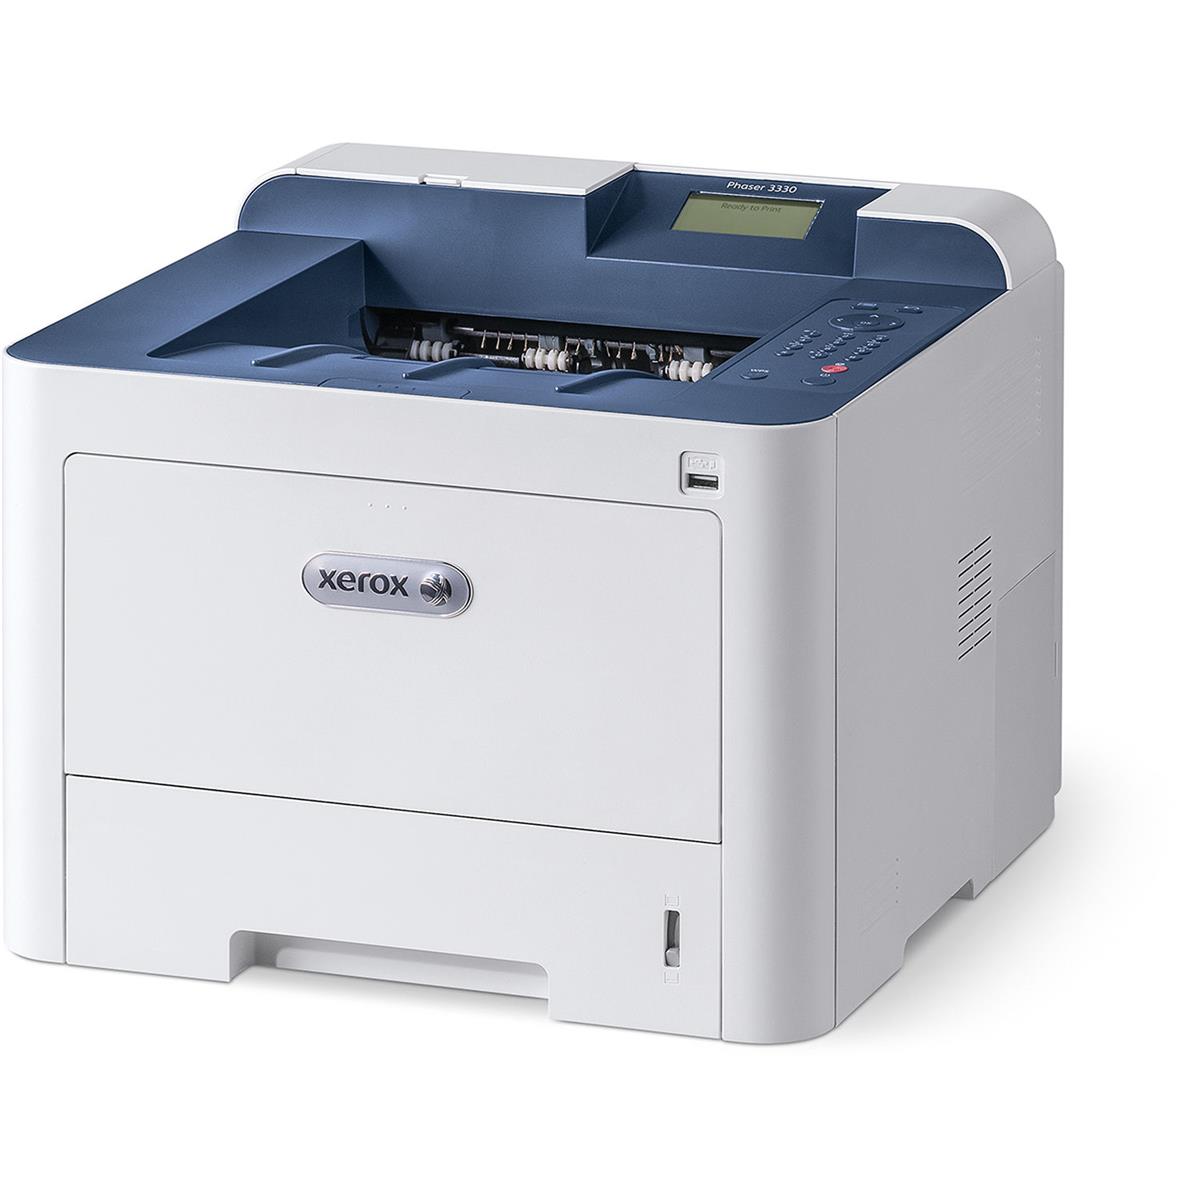 

Xerox Phaser 3330/DNI Wireless Monochrome Laser Printer, WiFi